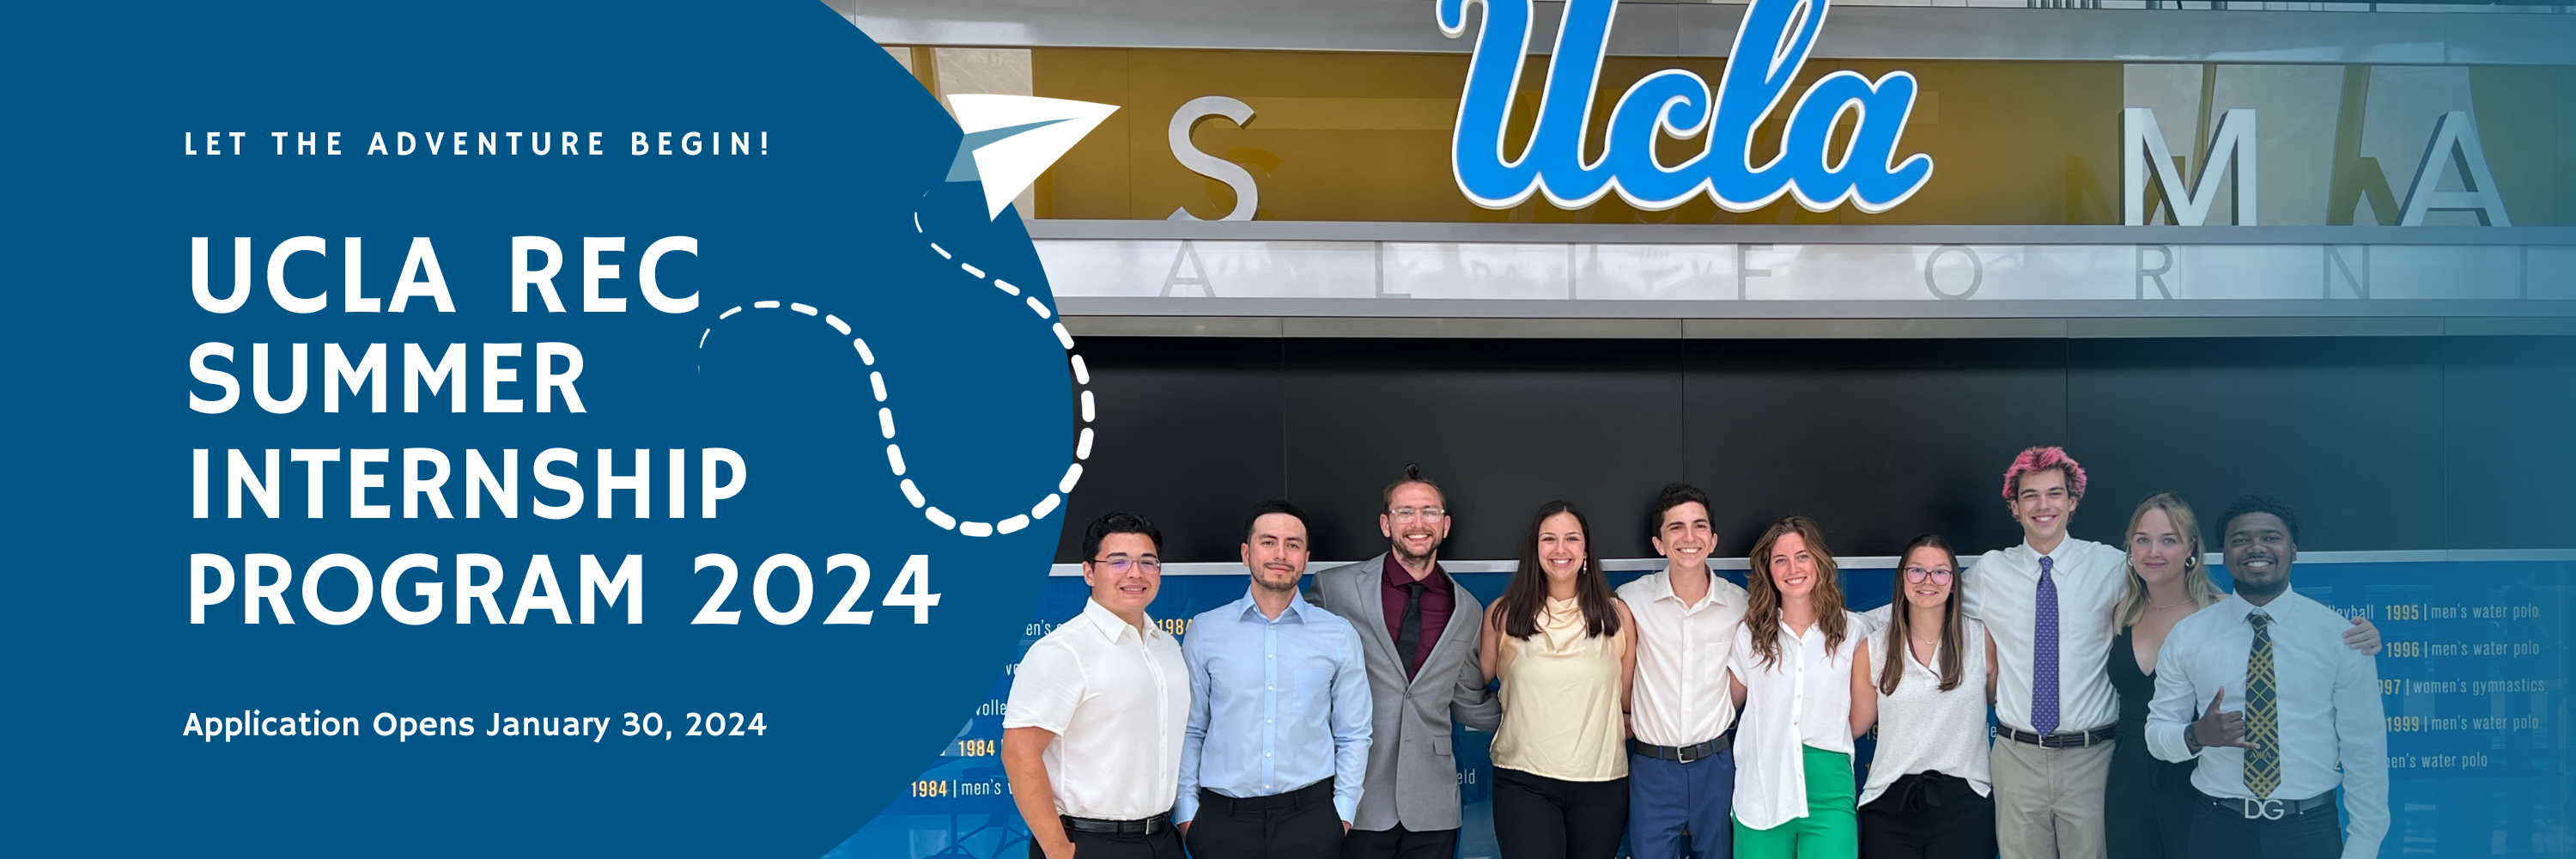 Let the adventure begin. UCLA Rec Summer Internship Program 2024. Application opens Jan. 30, 2024. Photo of 10 students standing side by side under a UCLA sign.